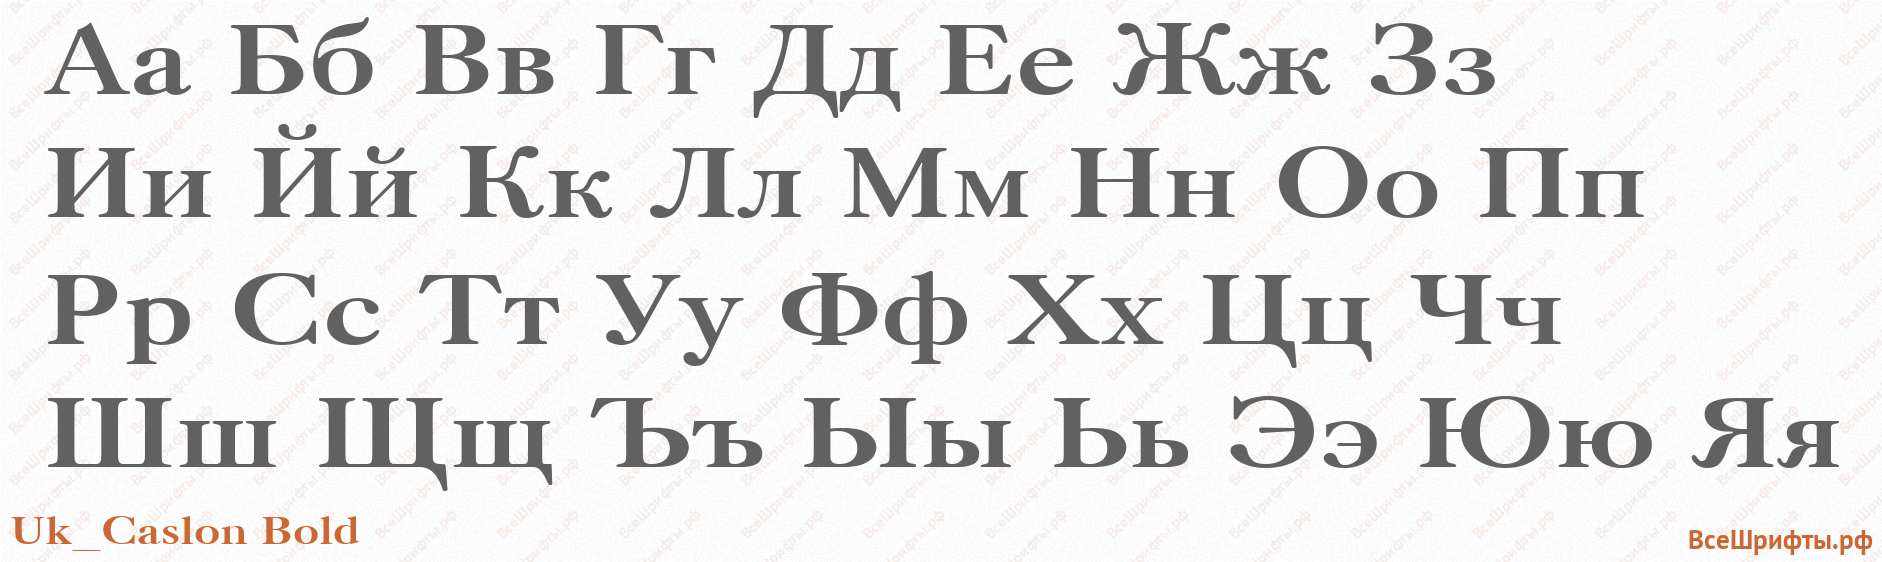 Шрифт Uk_Caslon Bold с русскими буквами